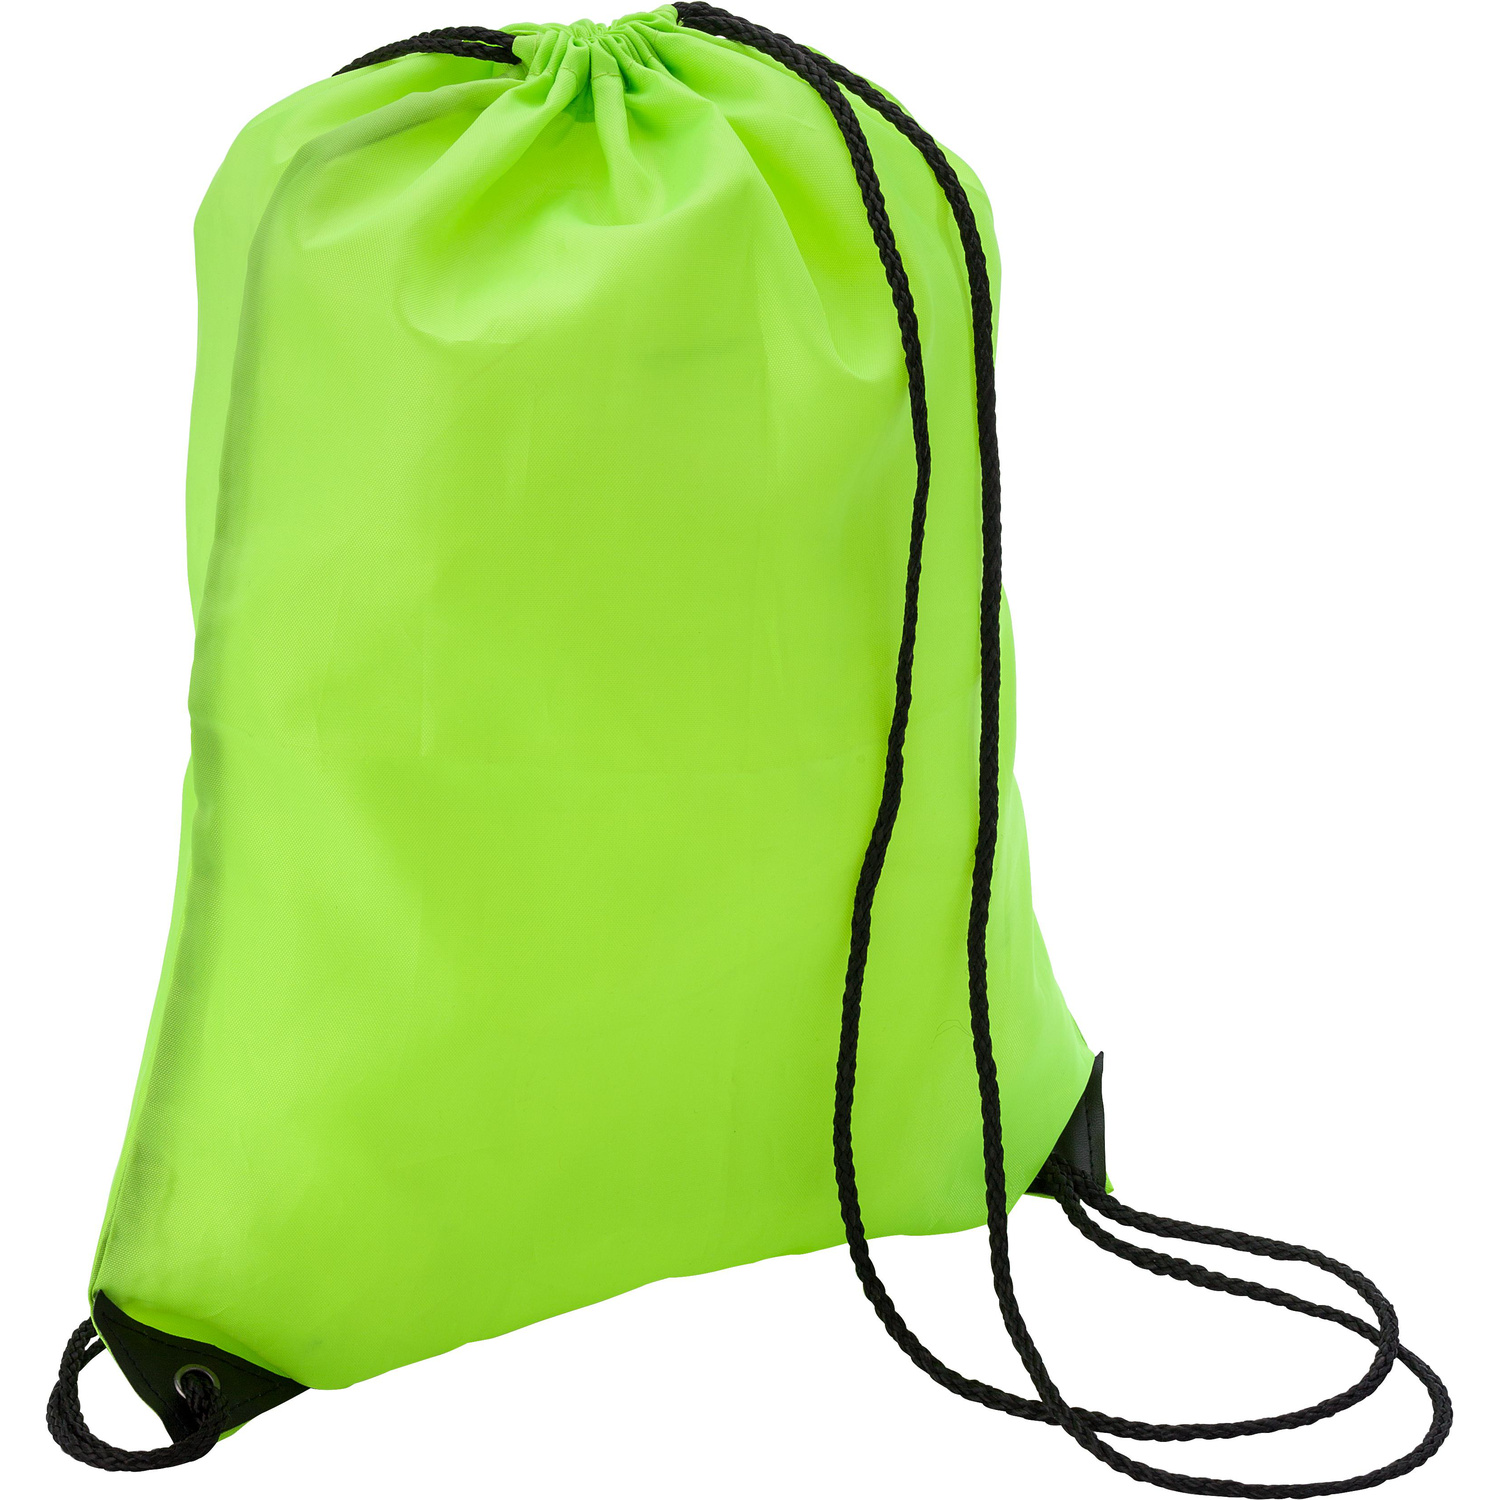 007097 019999999 3d090 frt pro01 fal - Tidy Drawstring backpack